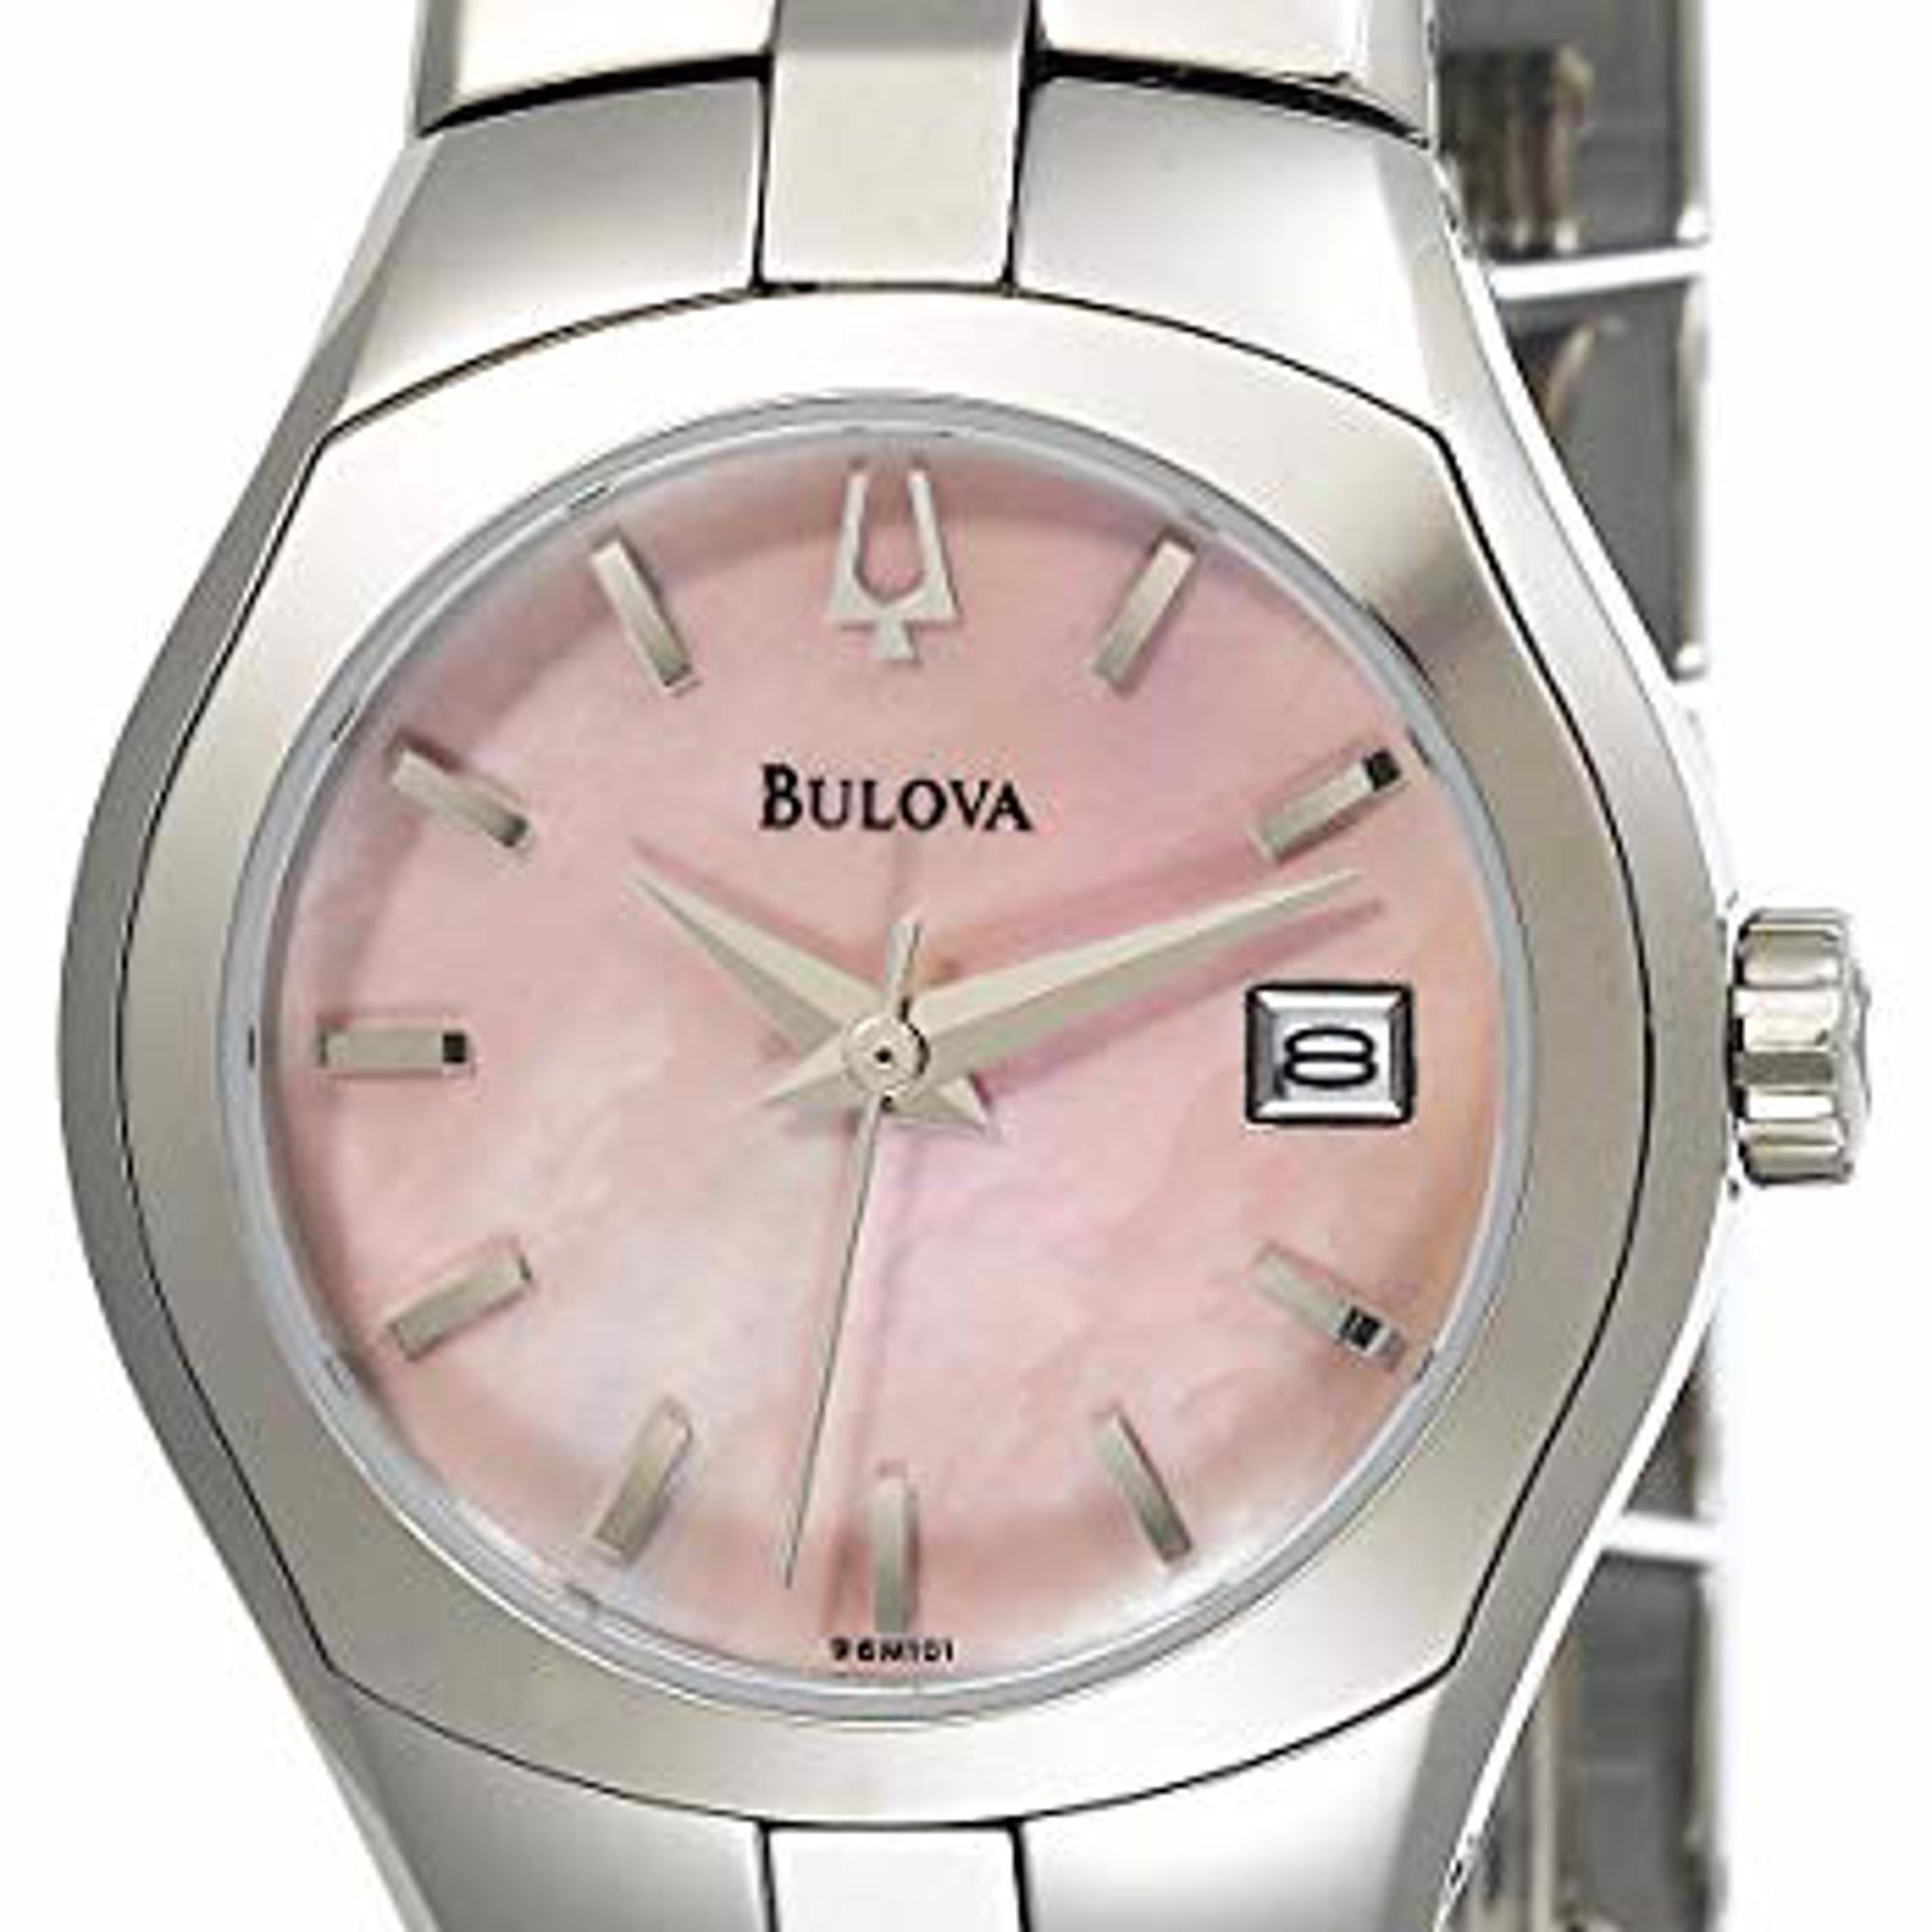 bulova pink face watch